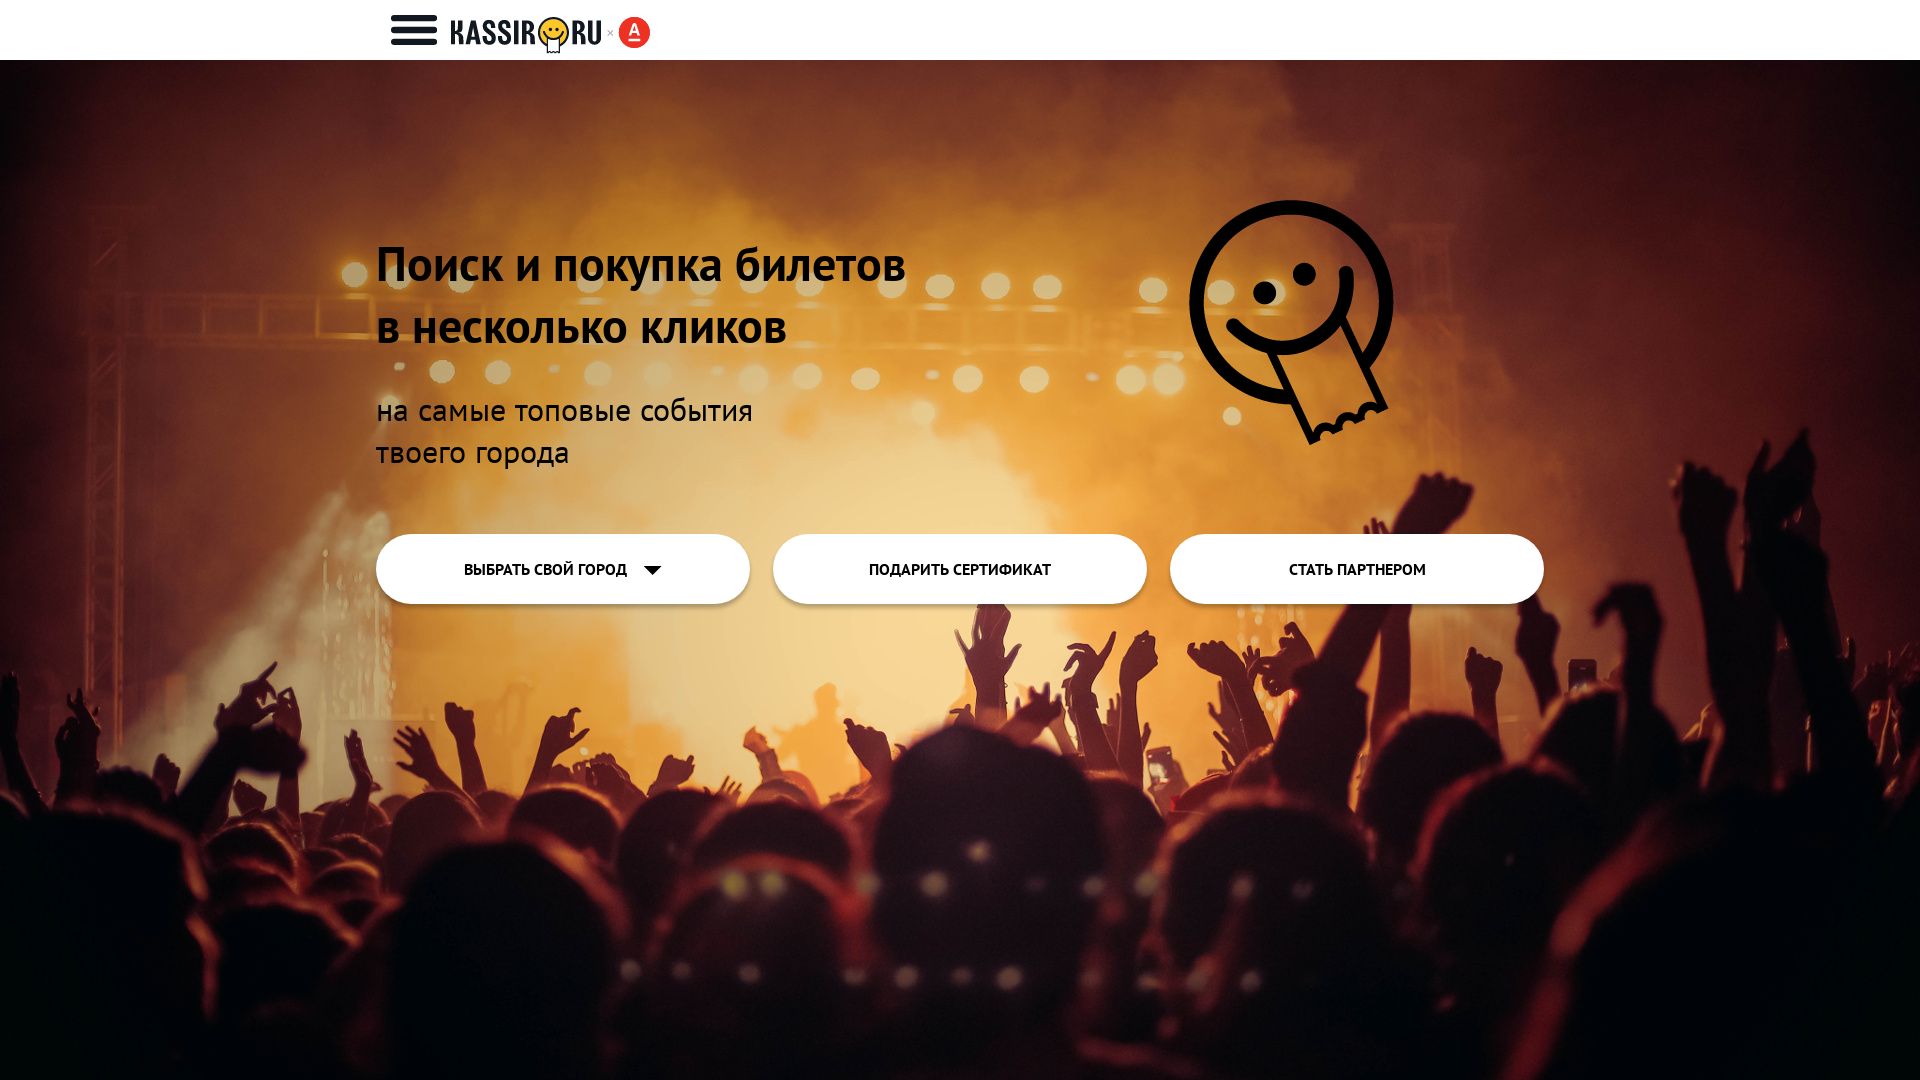 Stato del sito web kassir.ru è   ONLINE